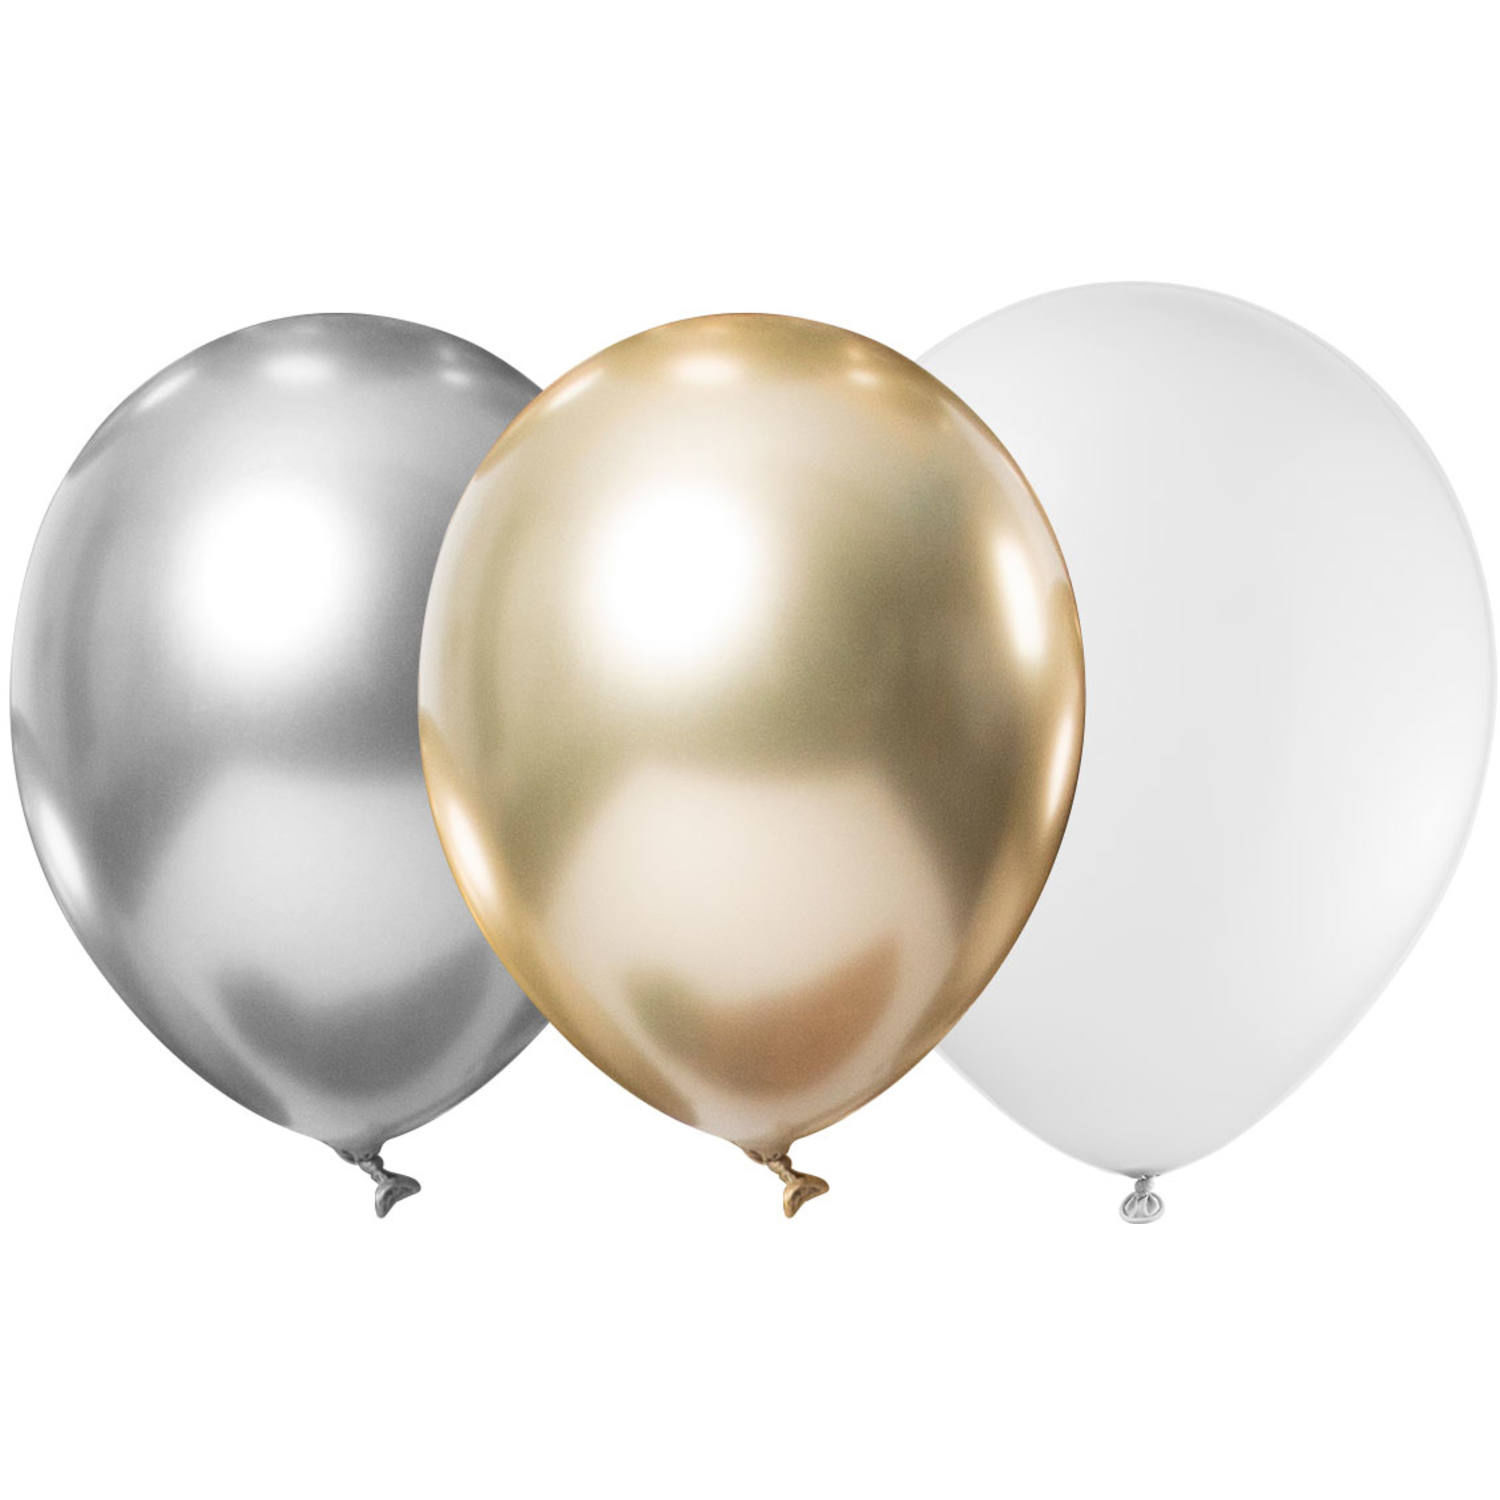 NEU Ballonset Helium & Ballons Hochzeit, gold und silber Bild 2